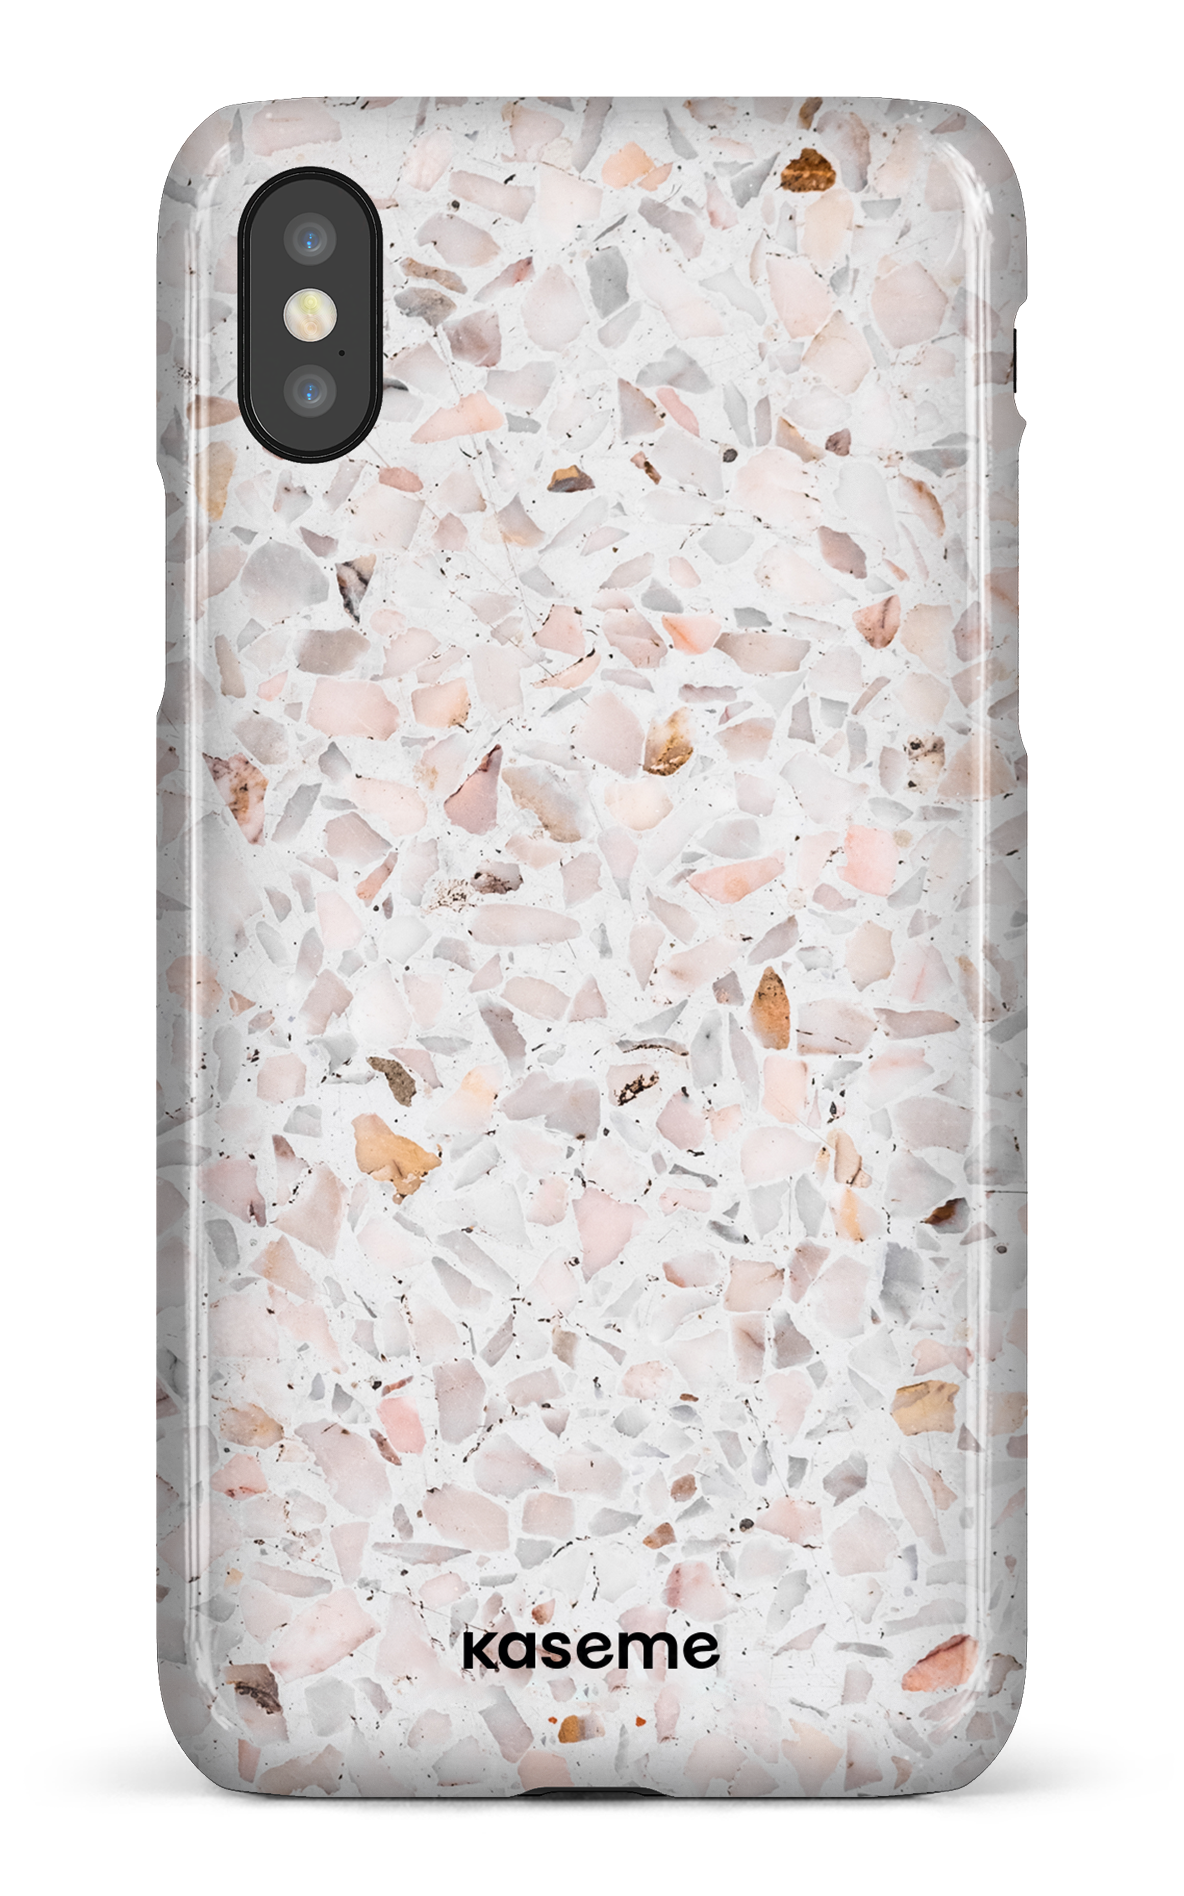 Frozen stone - iPhone X/XS